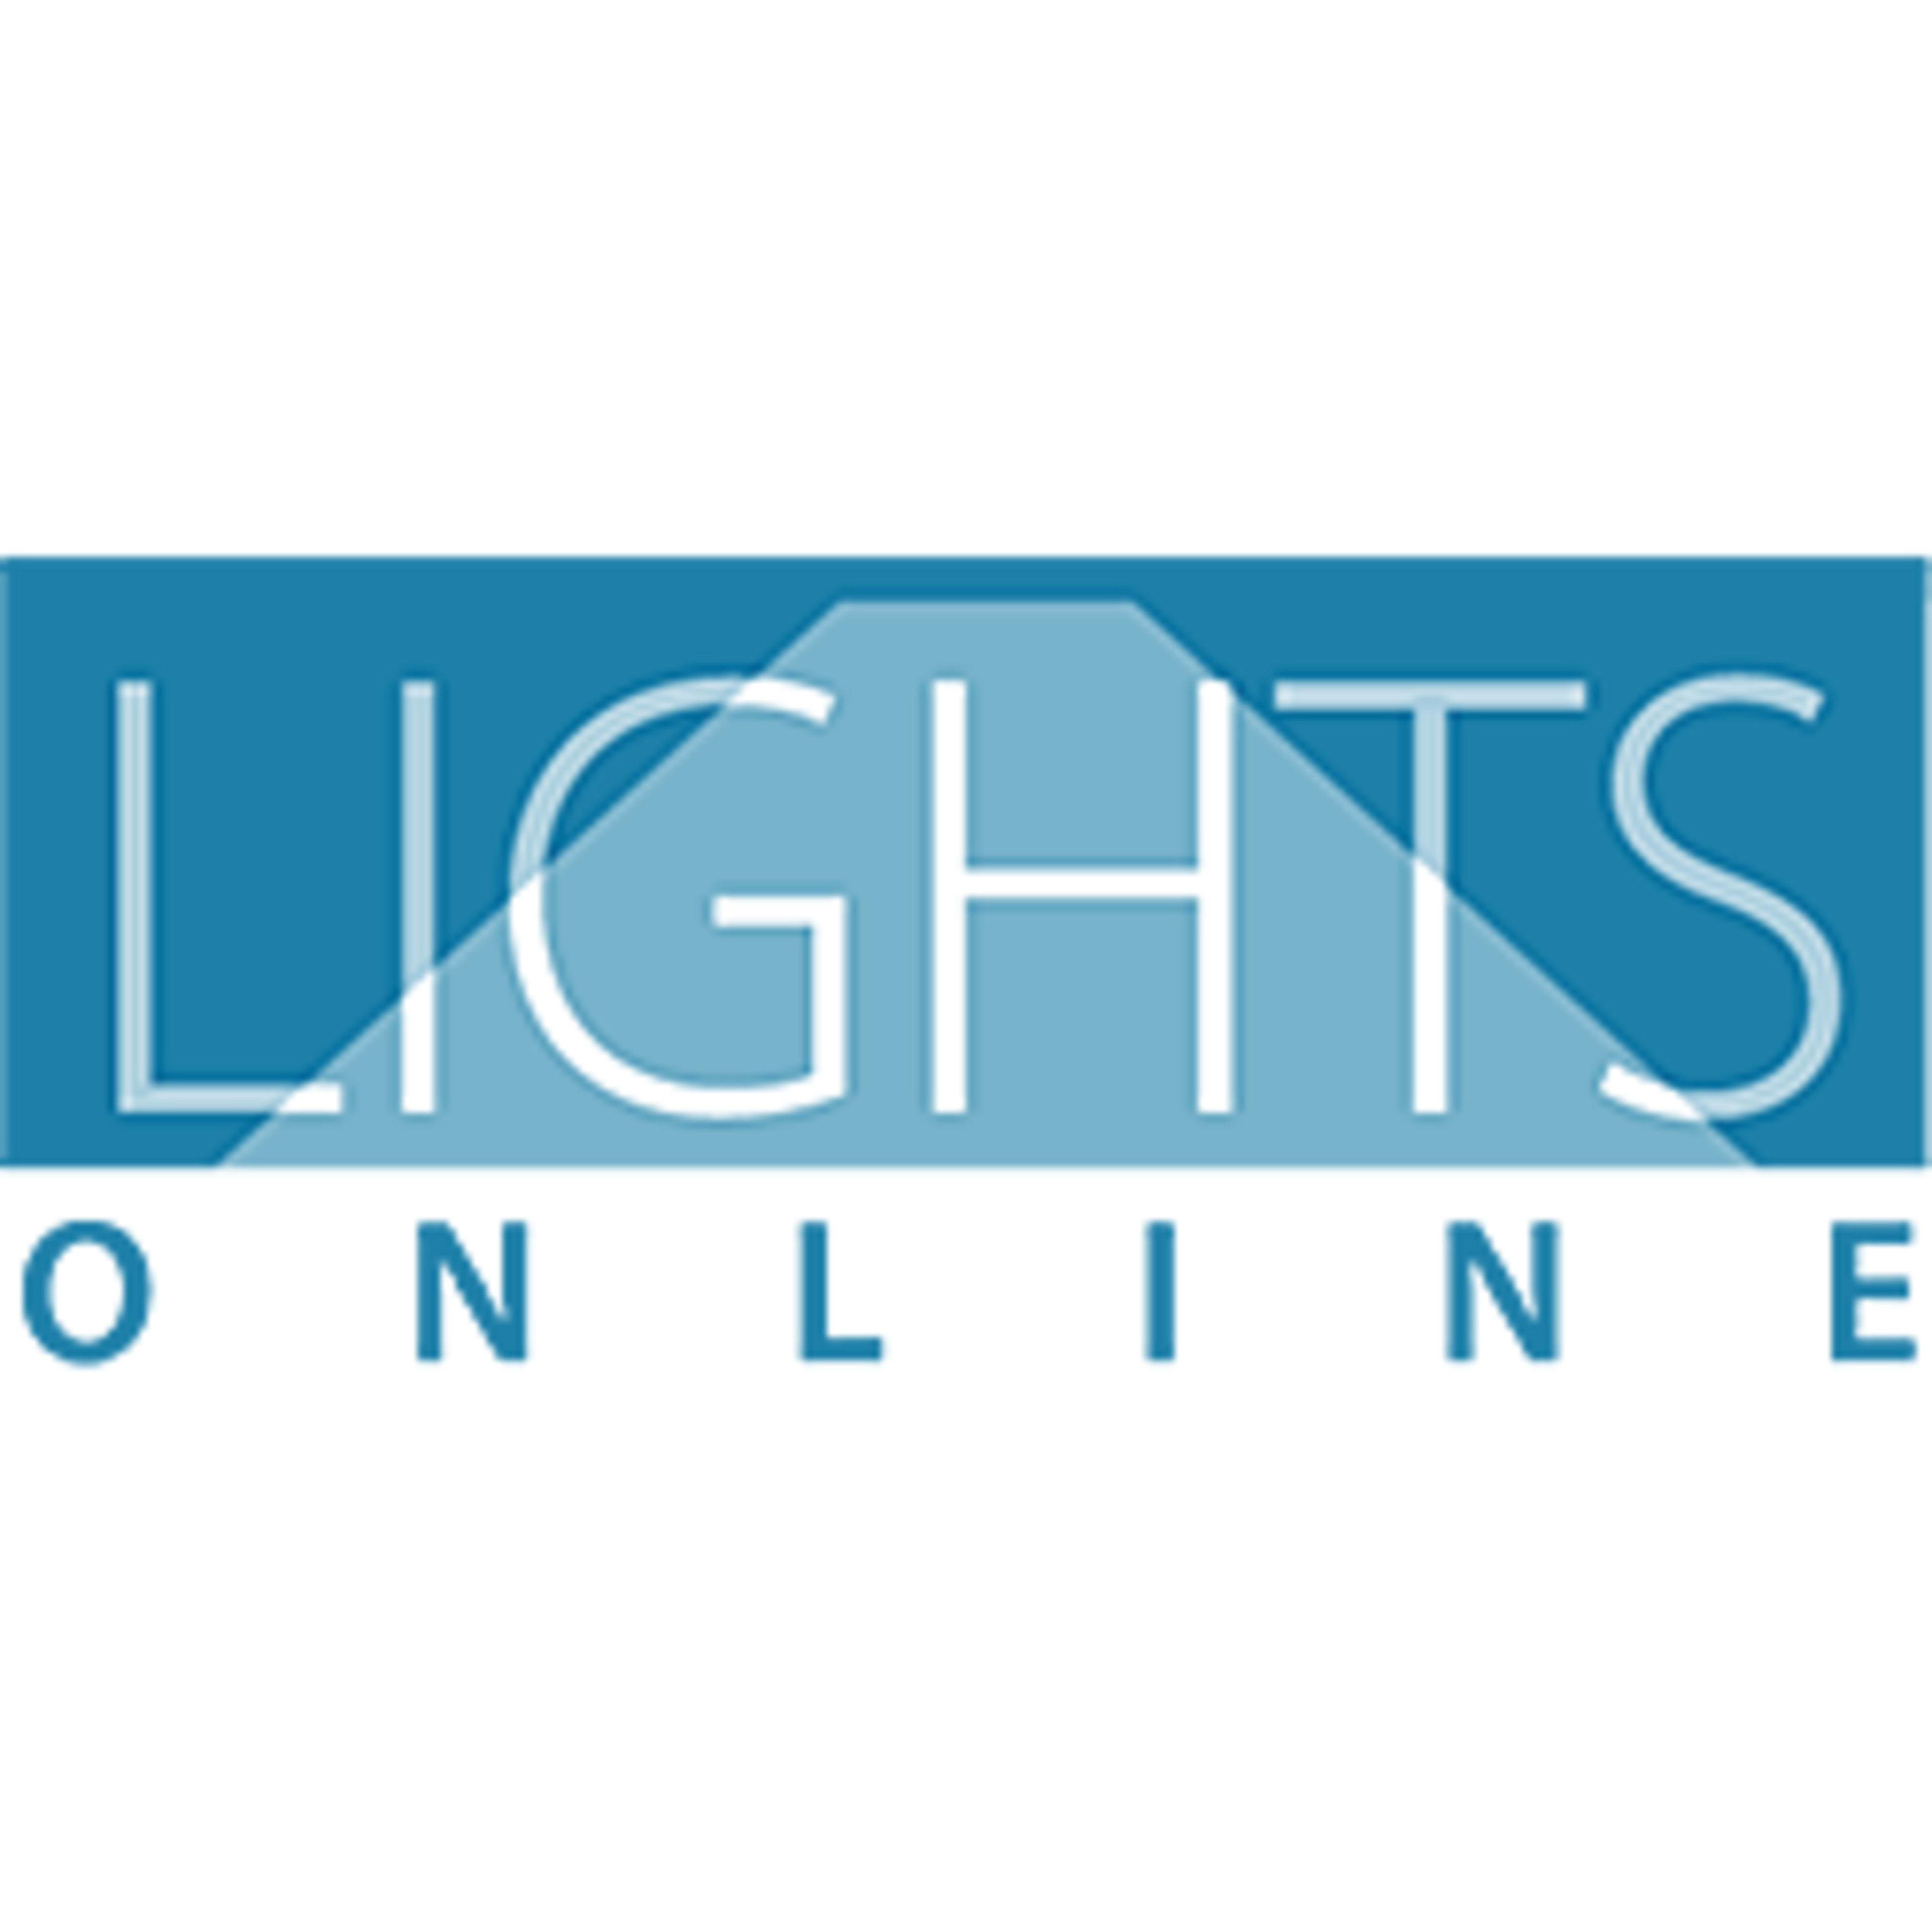 LightsOnline.com Code